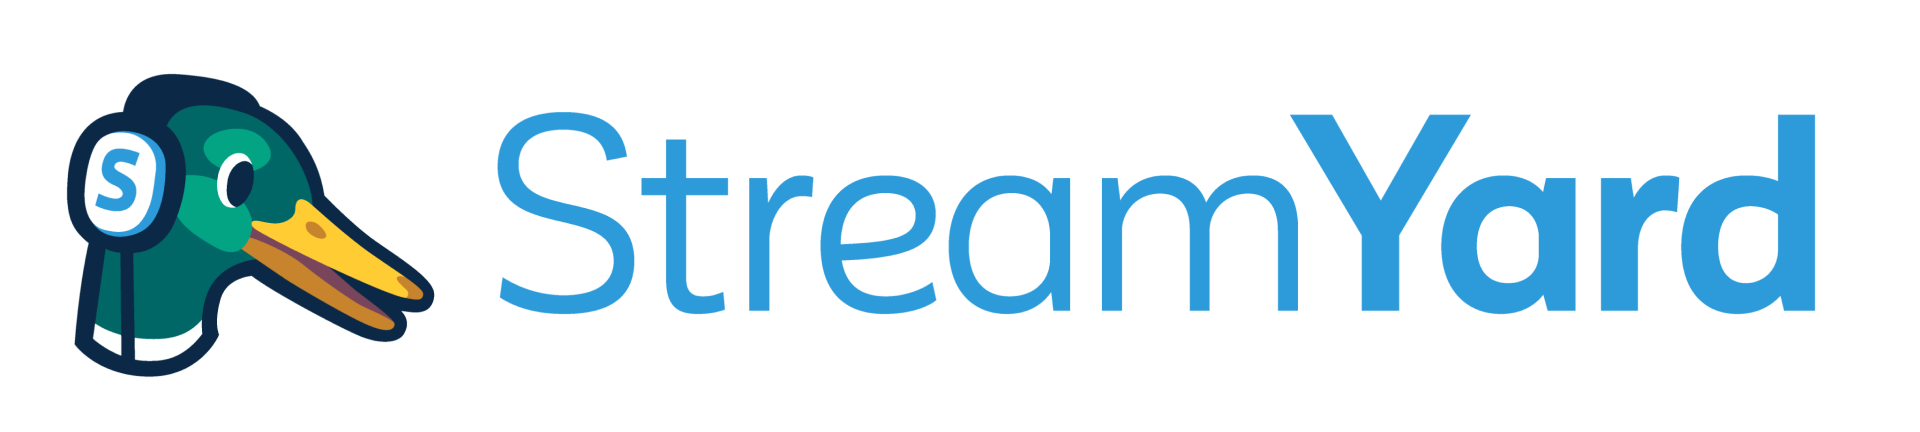 StreamYard Logo